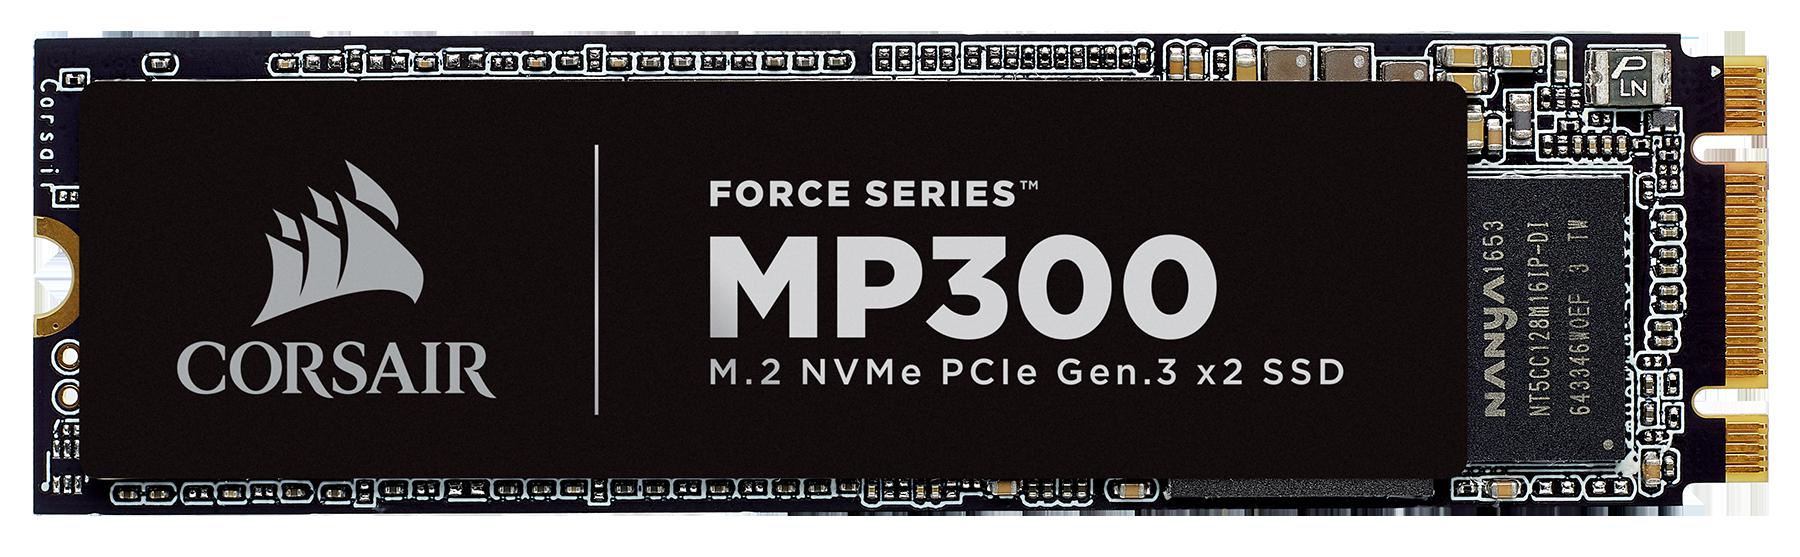 SSD Corsair Force MP300, 960GB, NVMe PCIe, M.2